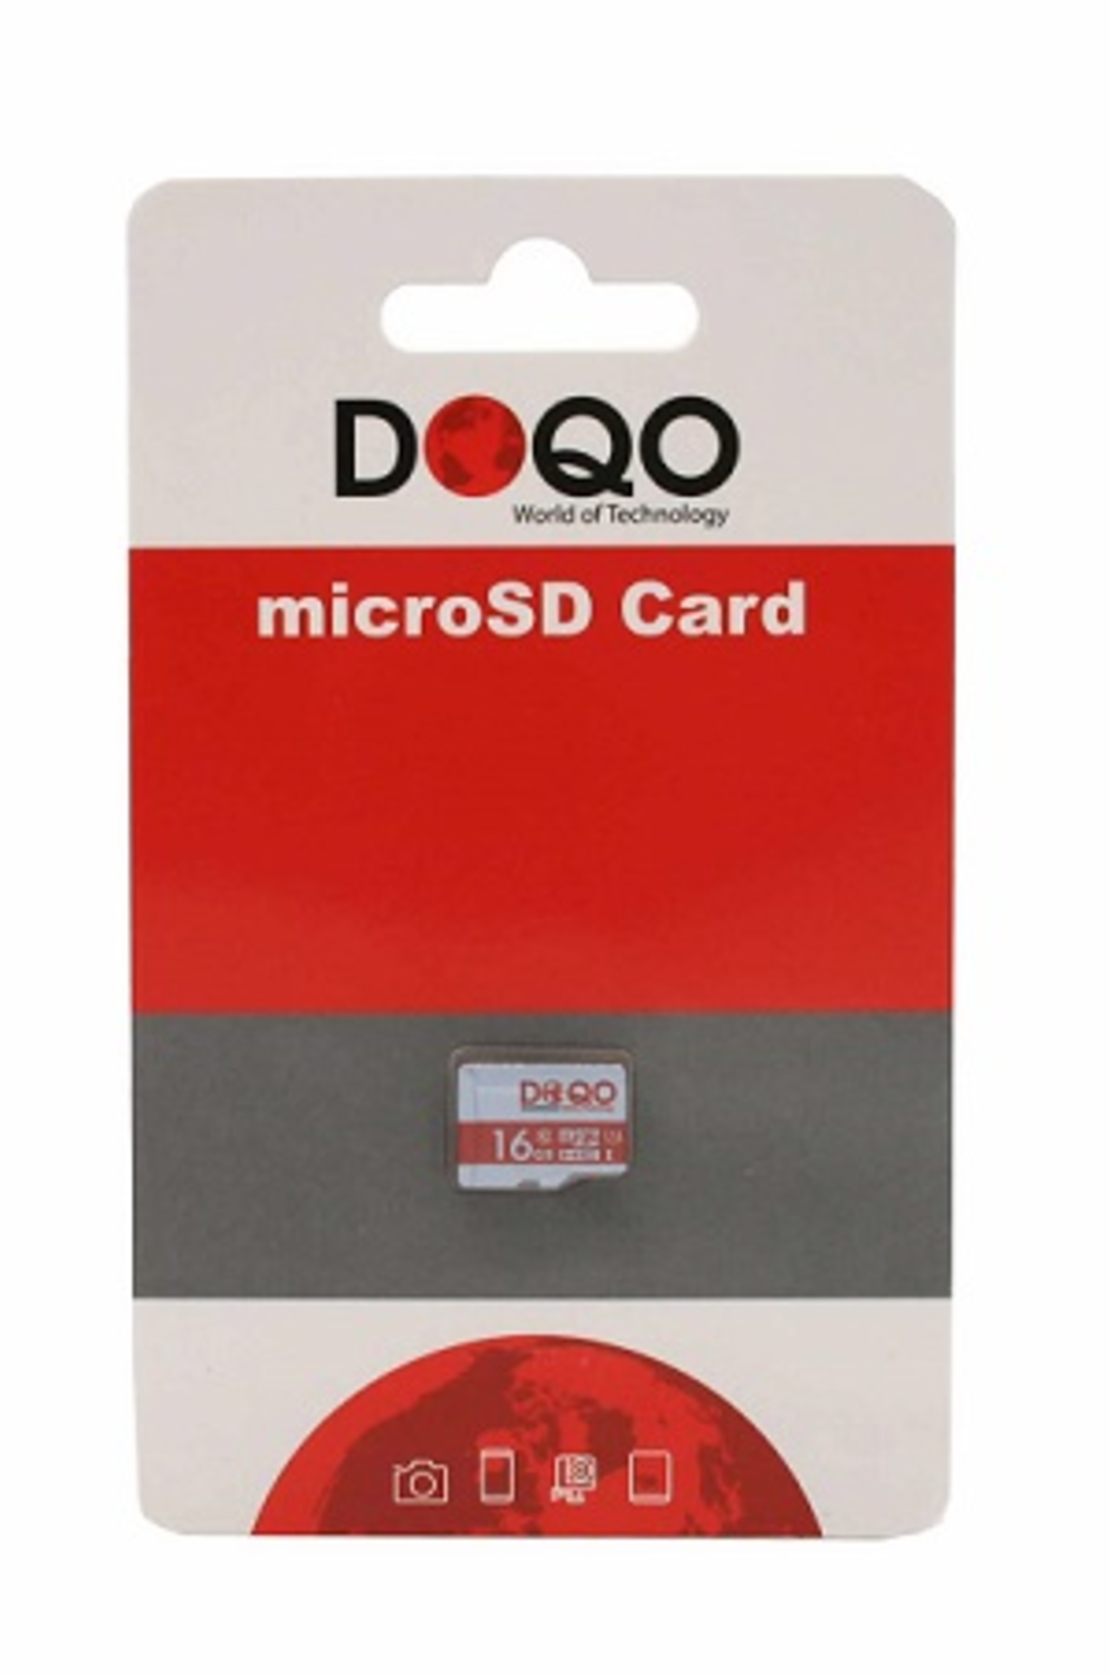 נגן MP3 ביט דוקו DOQO BEAT 8 GB